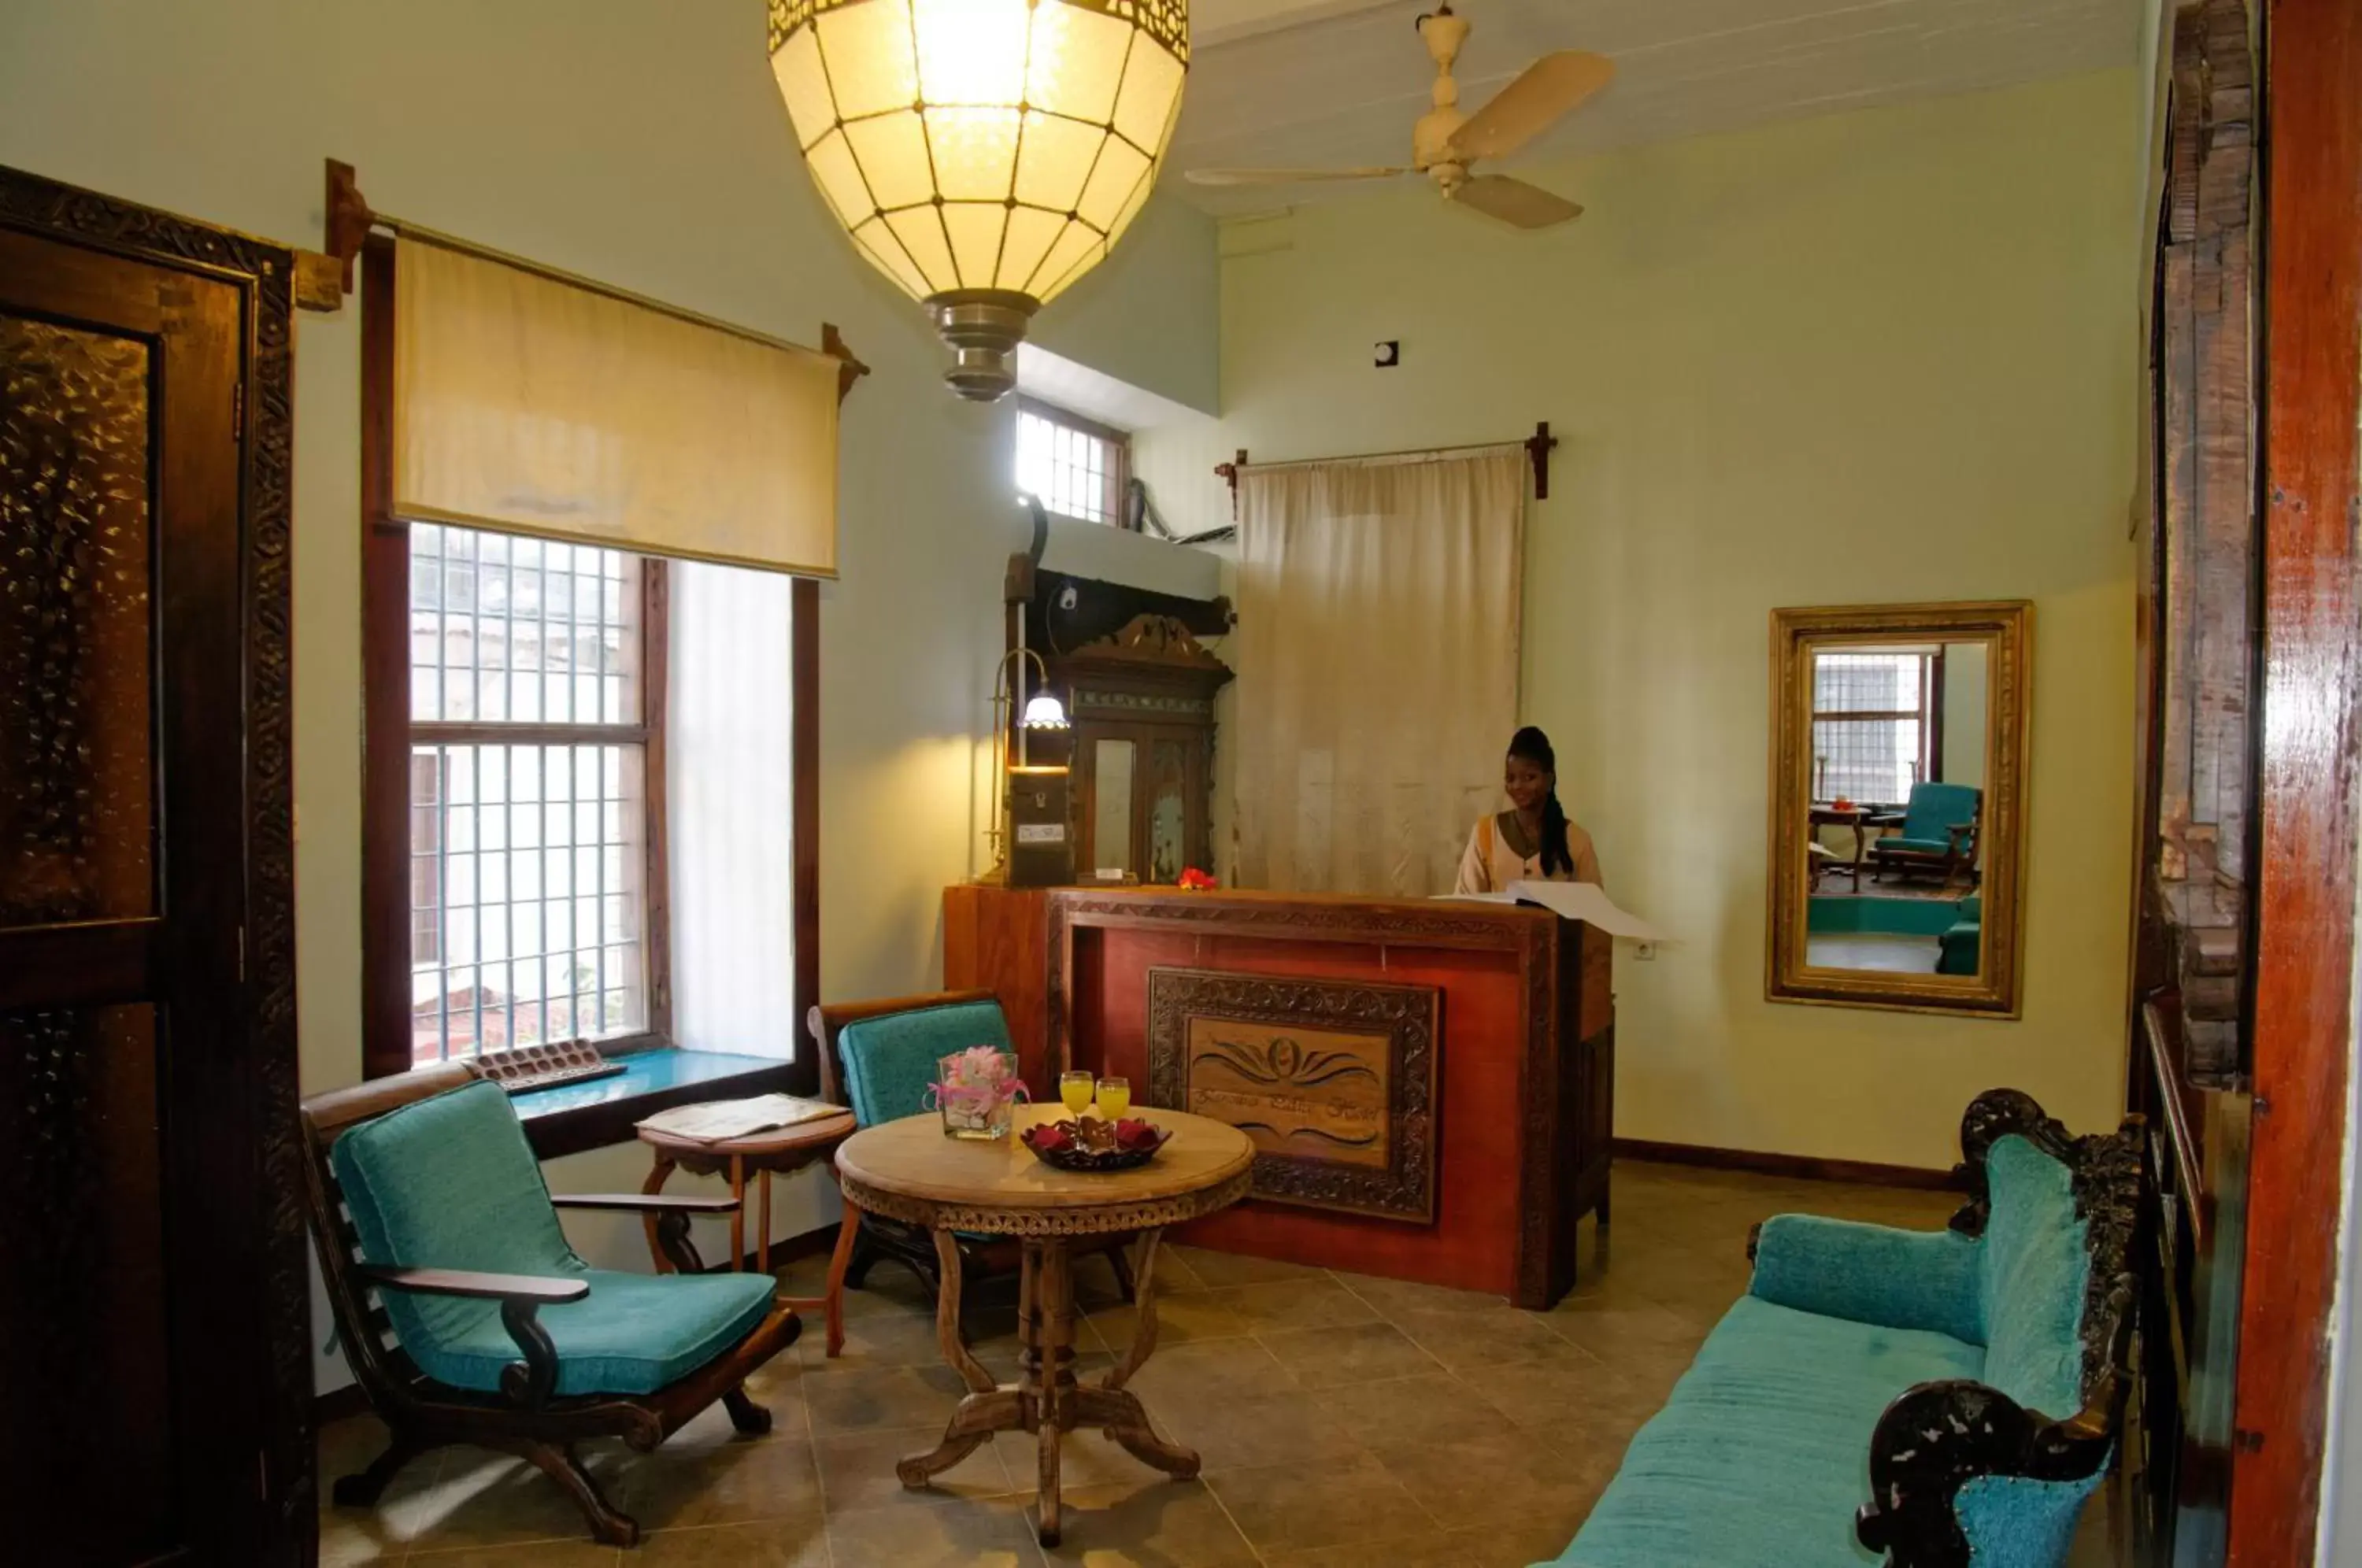 Lobby or reception in Zanzibar Palace Hotel